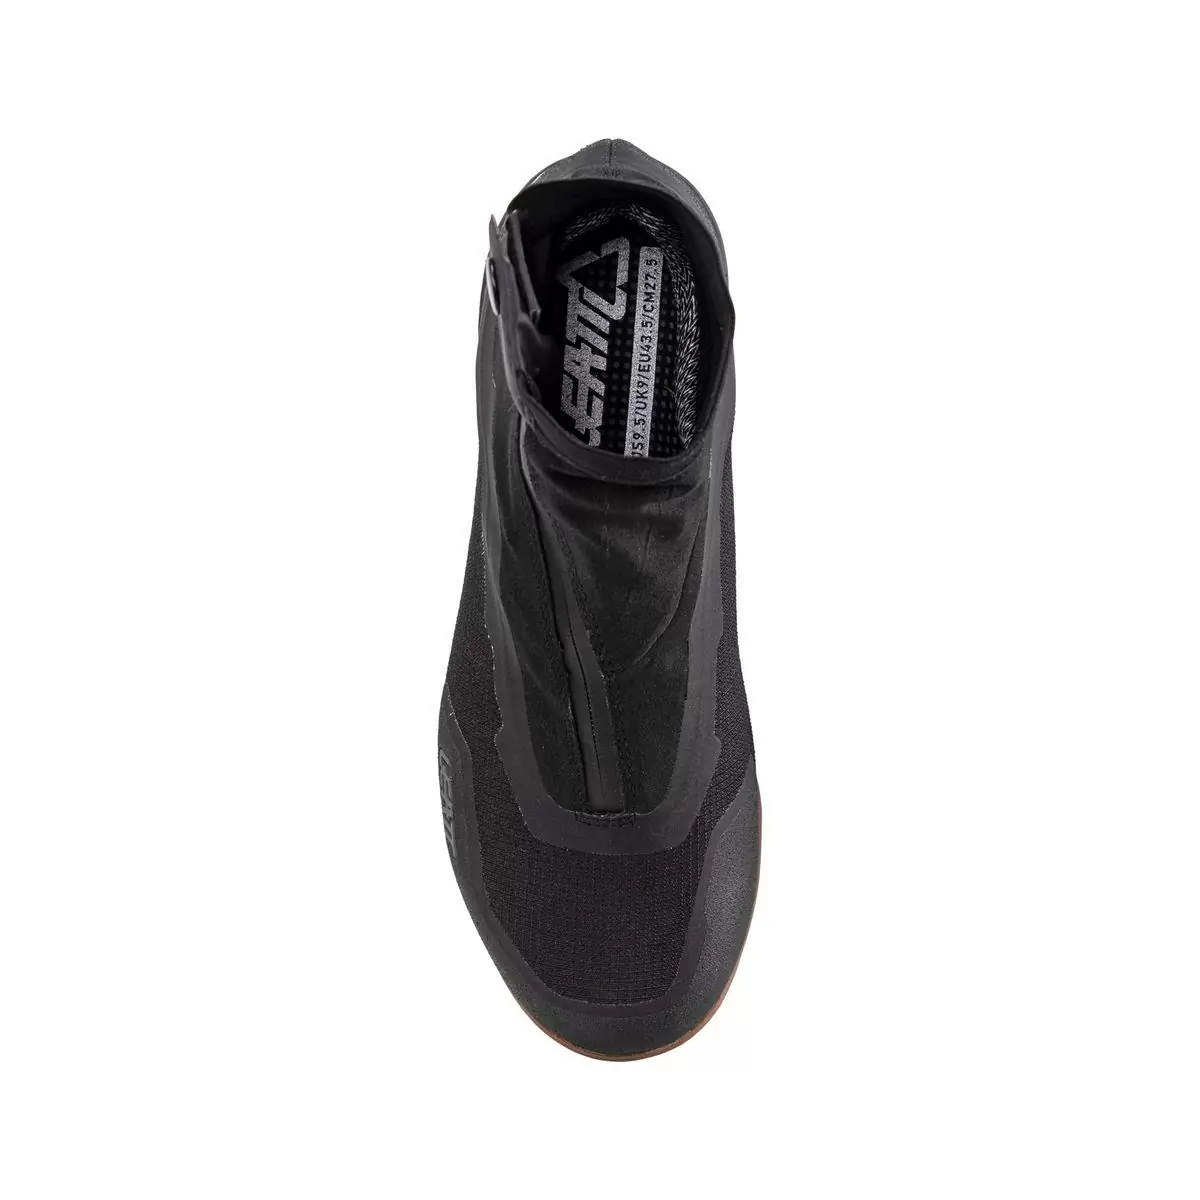 Chaussures VTT imperméables 7.0 HydraDri Clip Noir Taille 43 #2